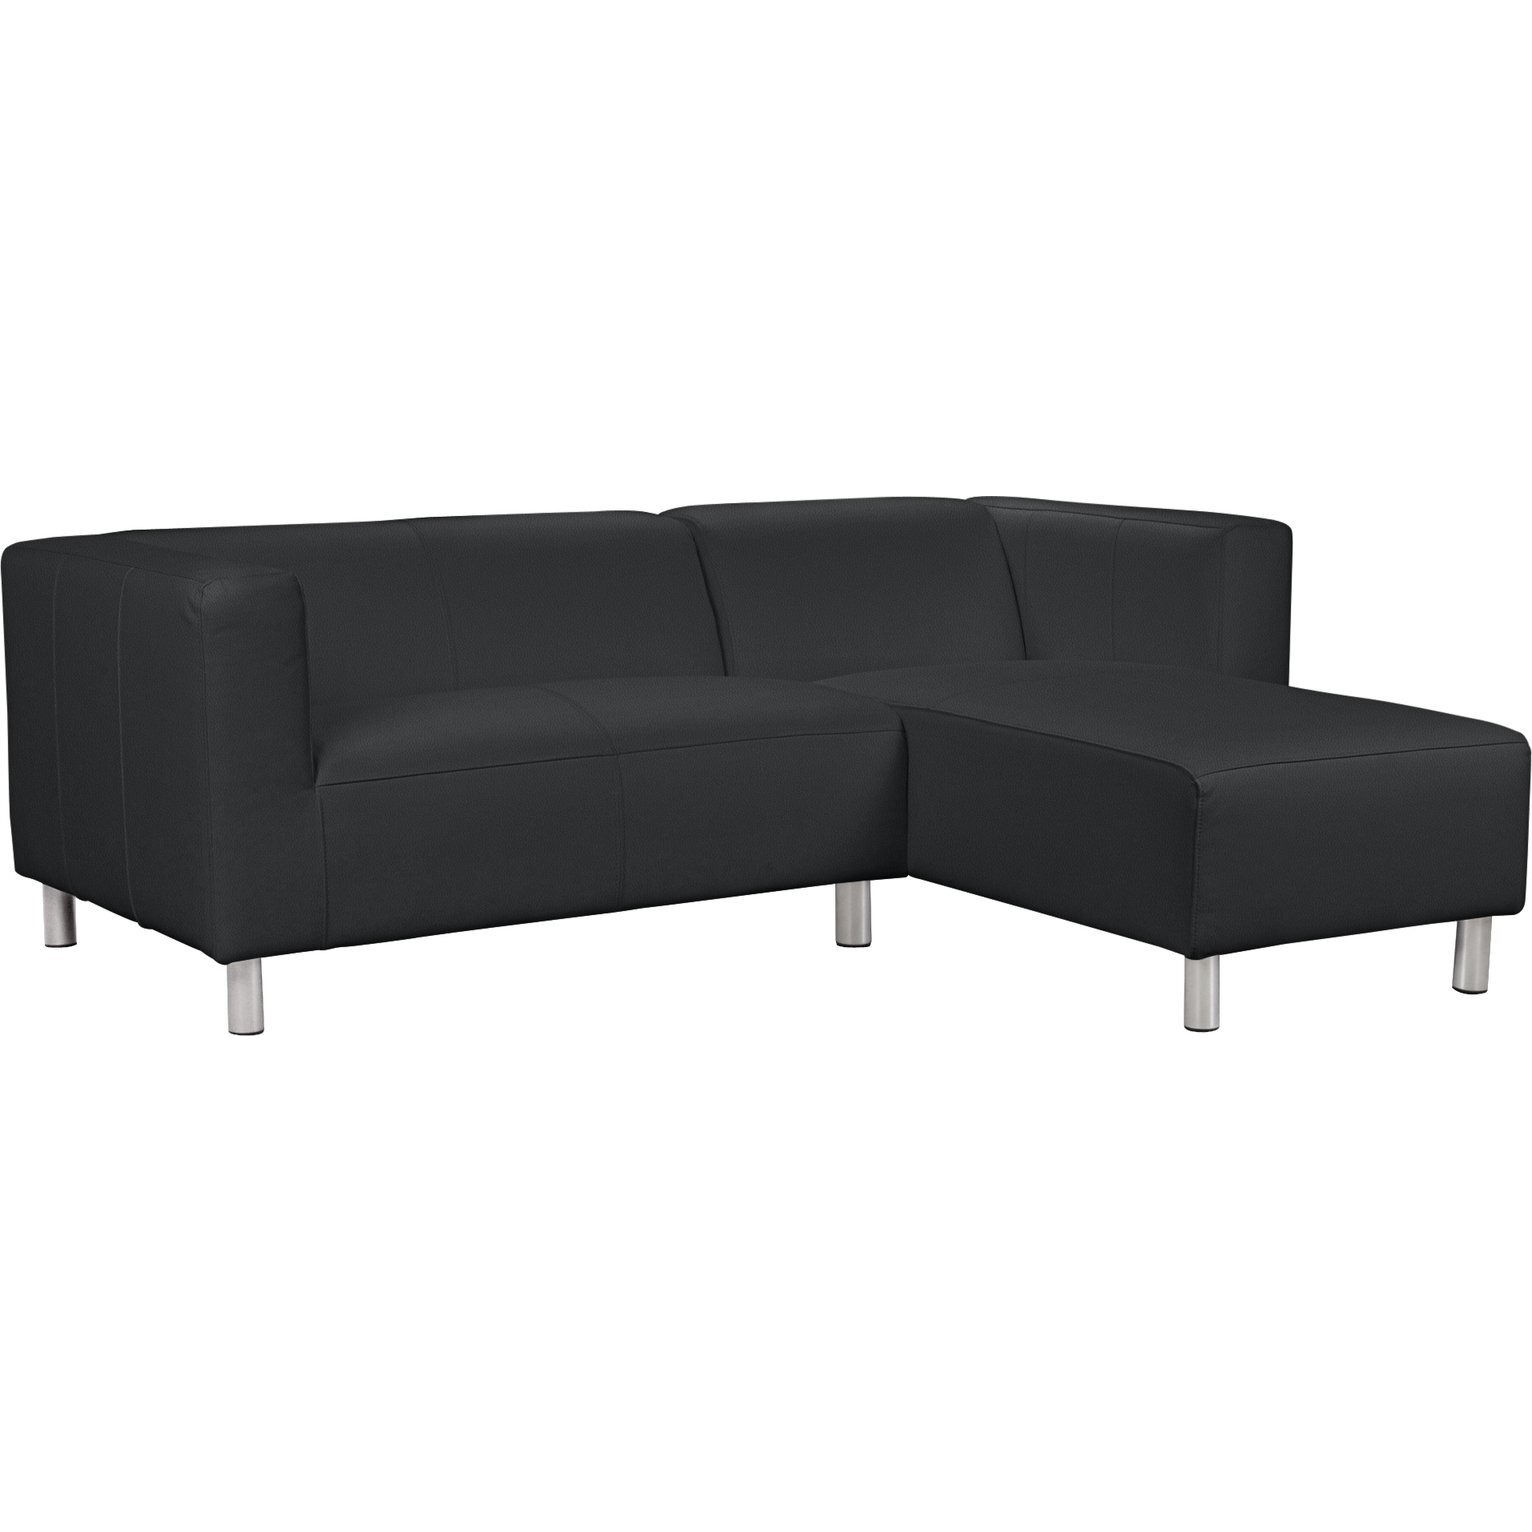 Argos Home Moda Right Hand Corner Chaise Sofa - Black - image 1